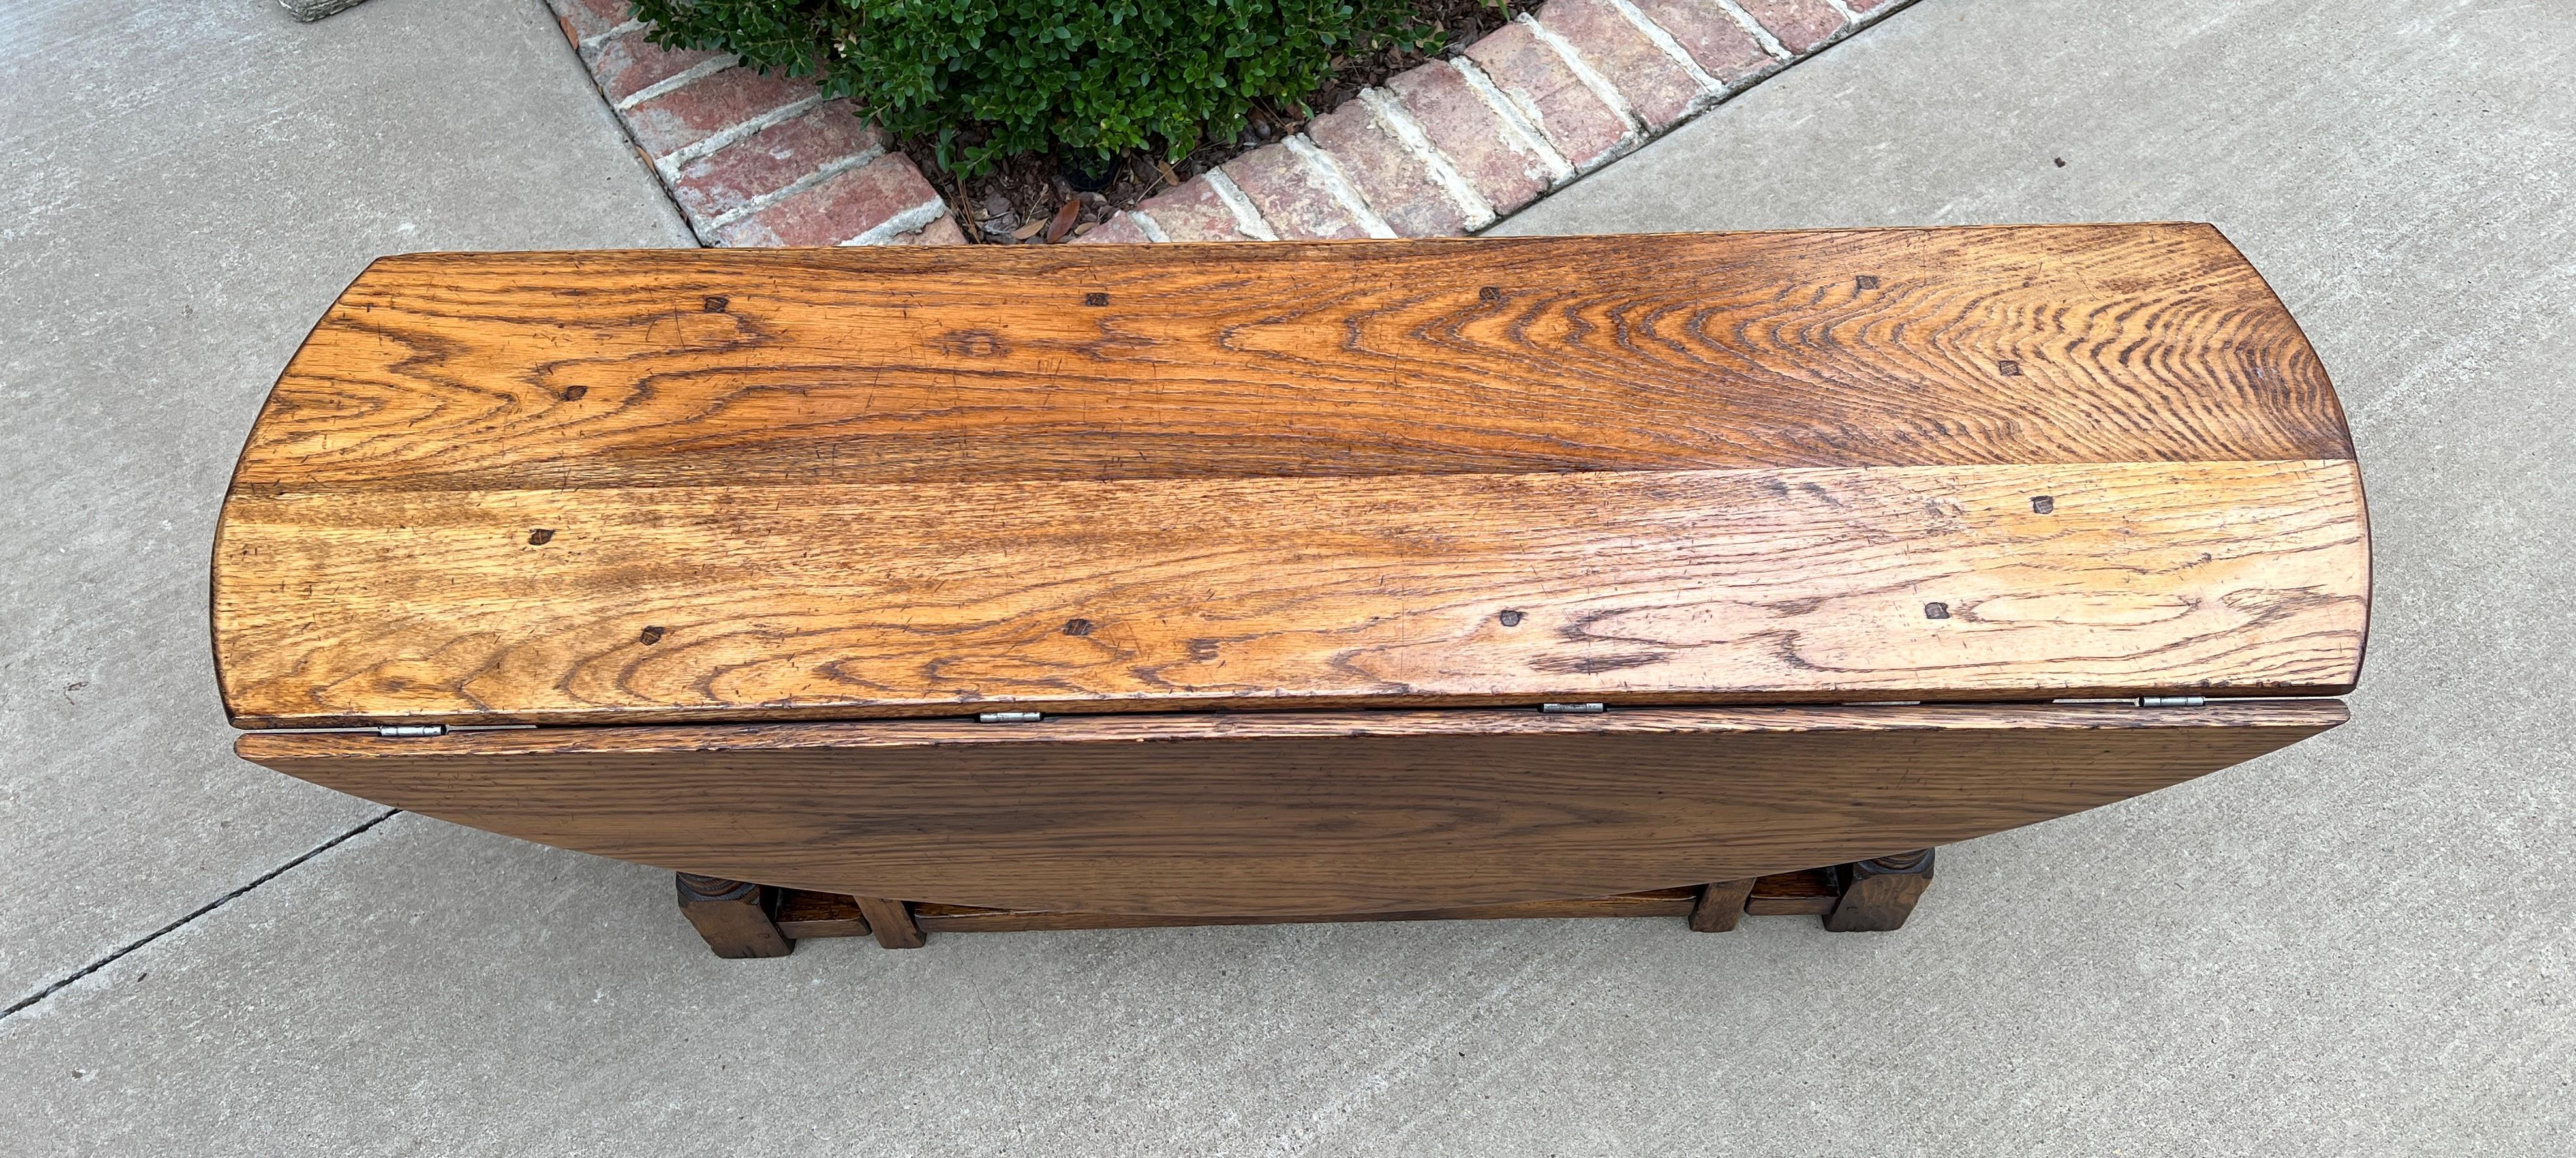 Antique English Coffee Table Bench Drop Leaf Gate Leg Oak Pegged C. 1900 For Sale 1